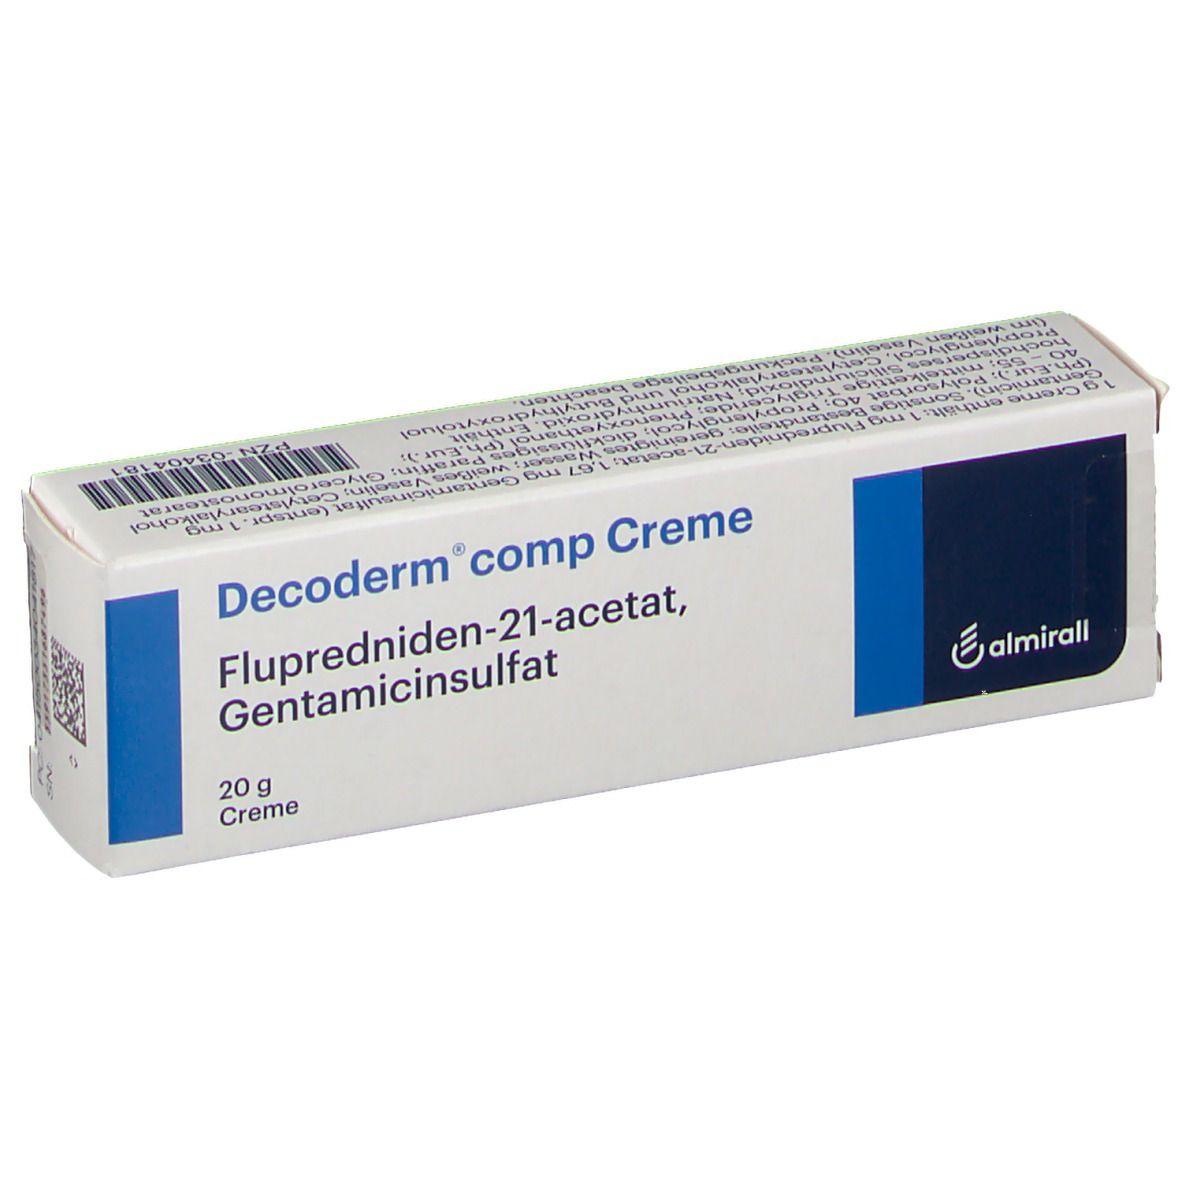 Decoderm® comp Creme